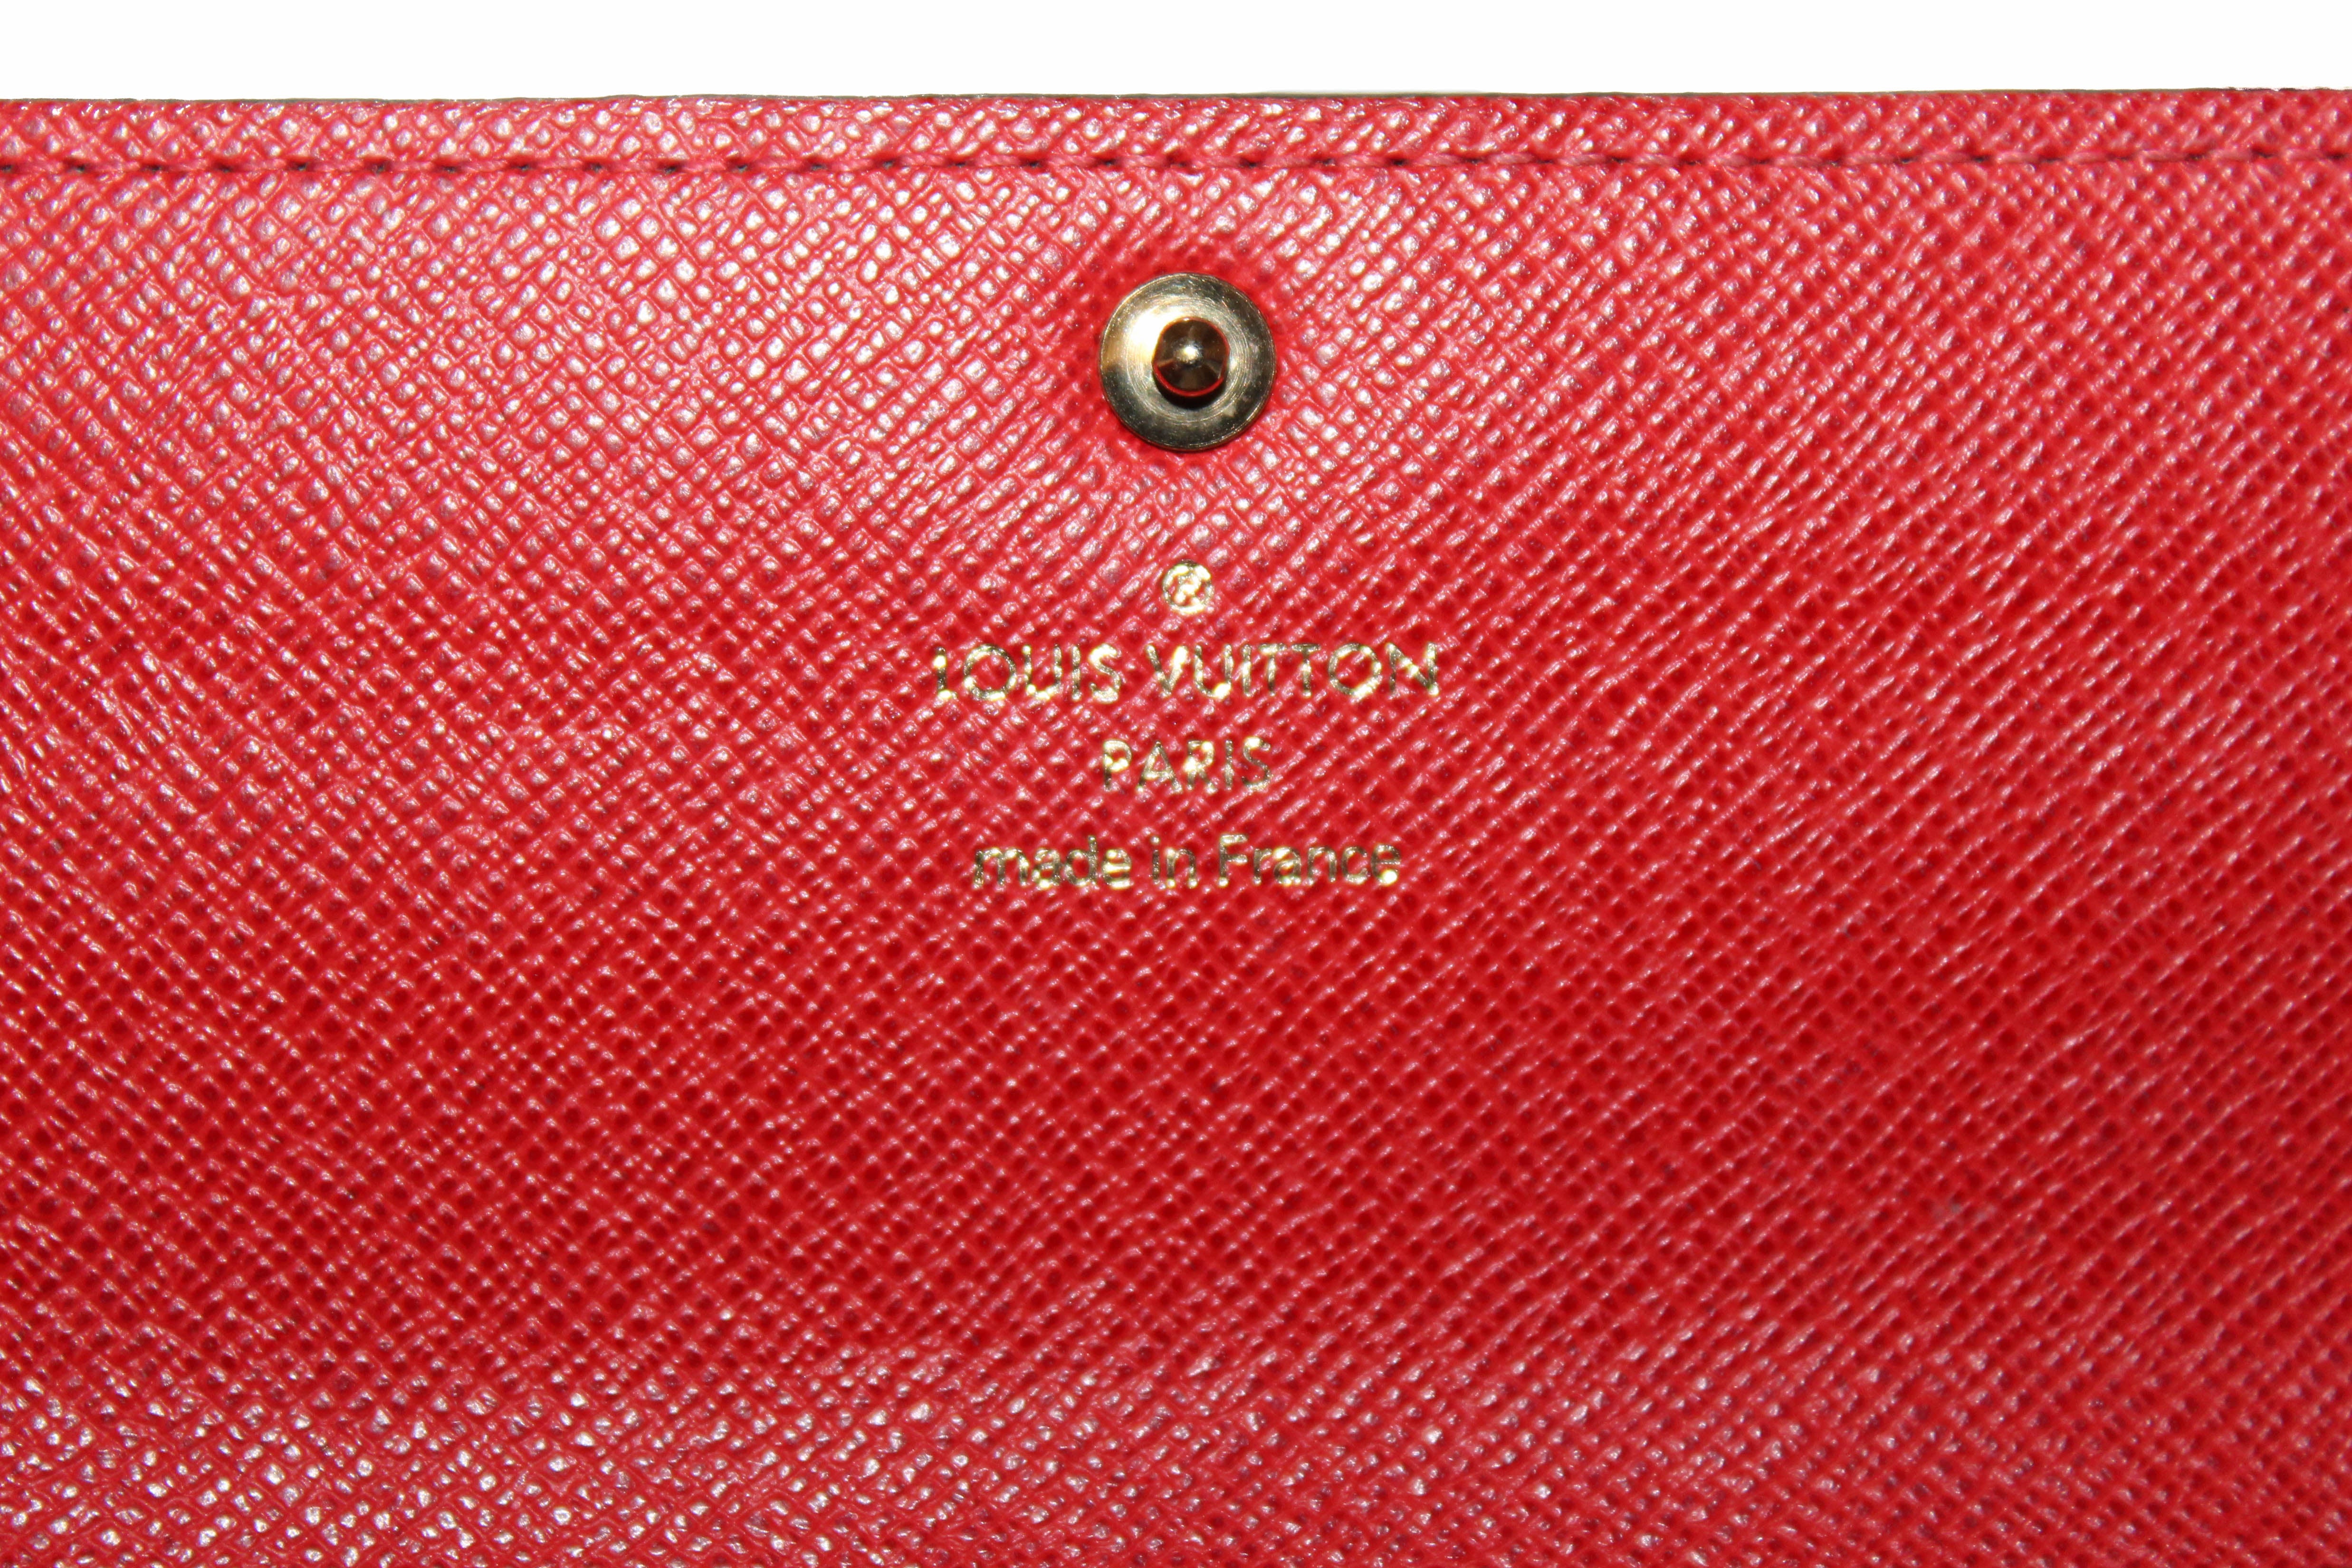 Louis Vuitton Rare Groom Bellboy Porte Tresor Sarah Long Wallet 6LVa1117